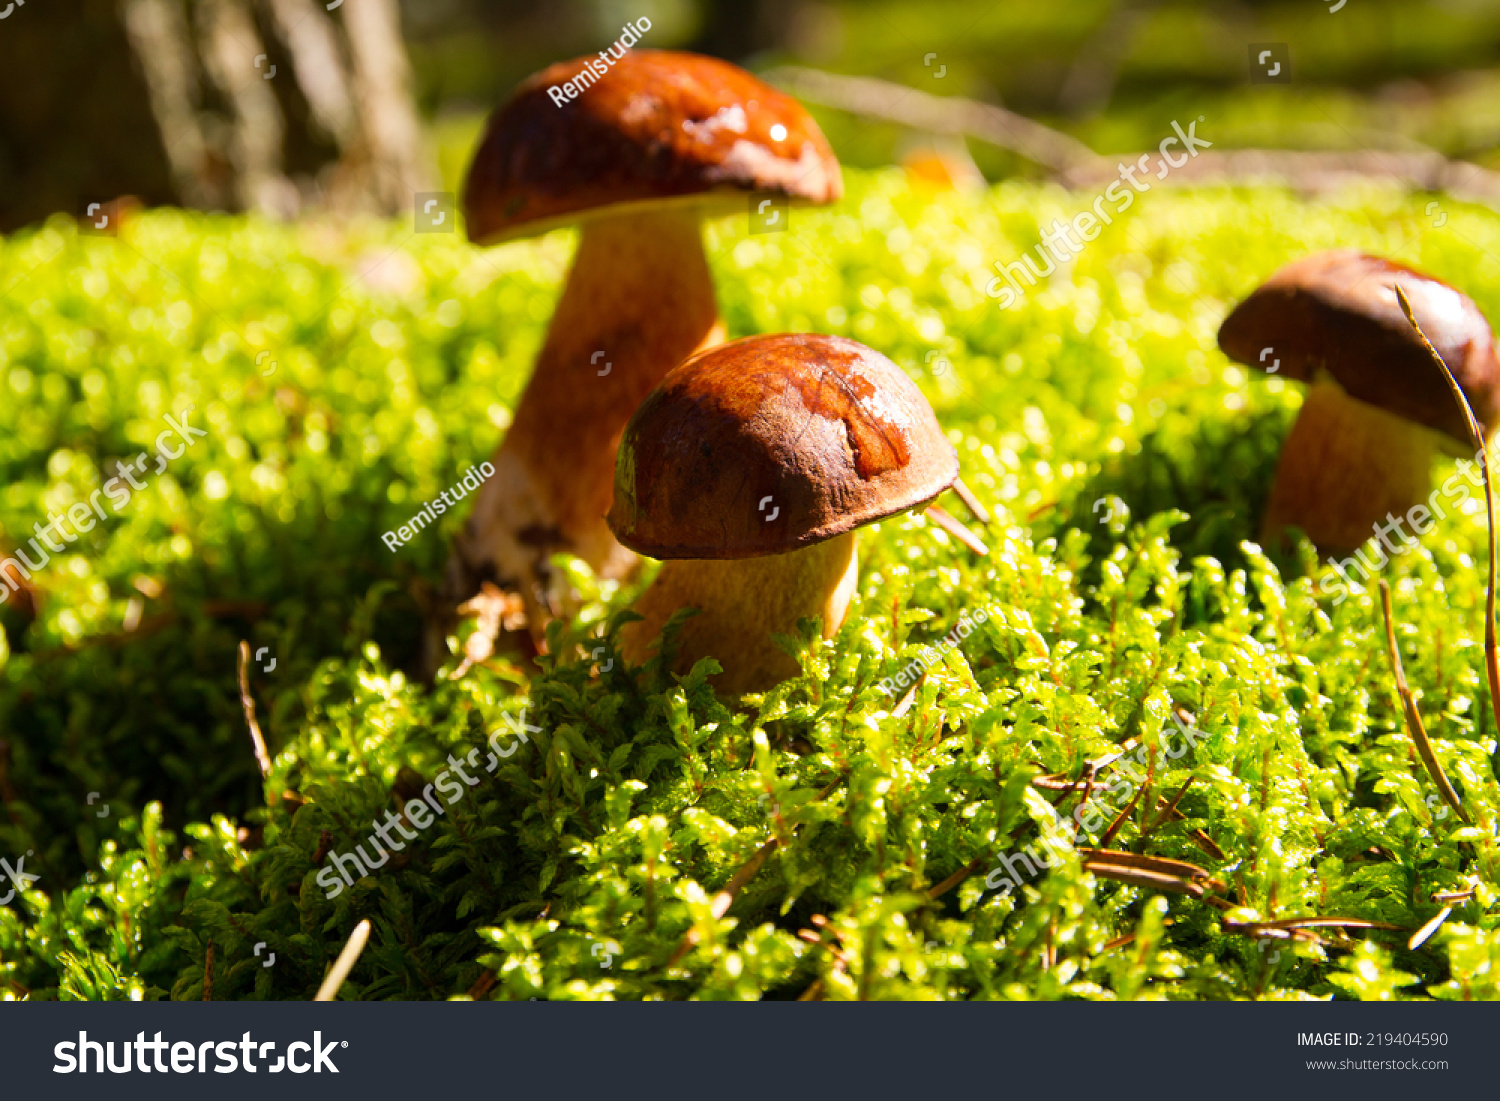 Mushrooms forest #219404590